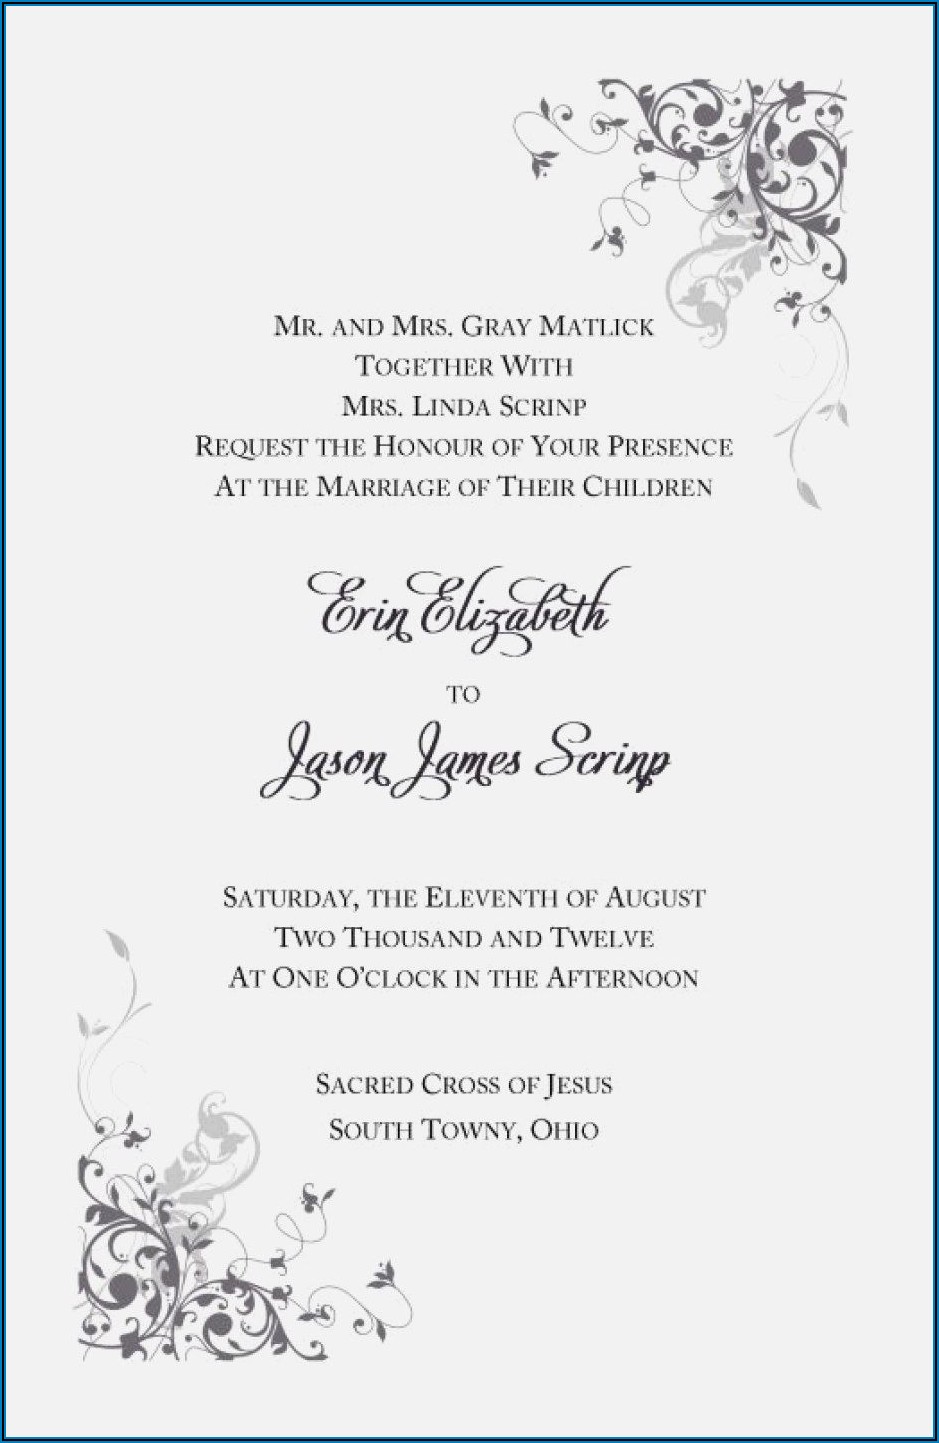 Catholic Wedding Invitation Cards Samples